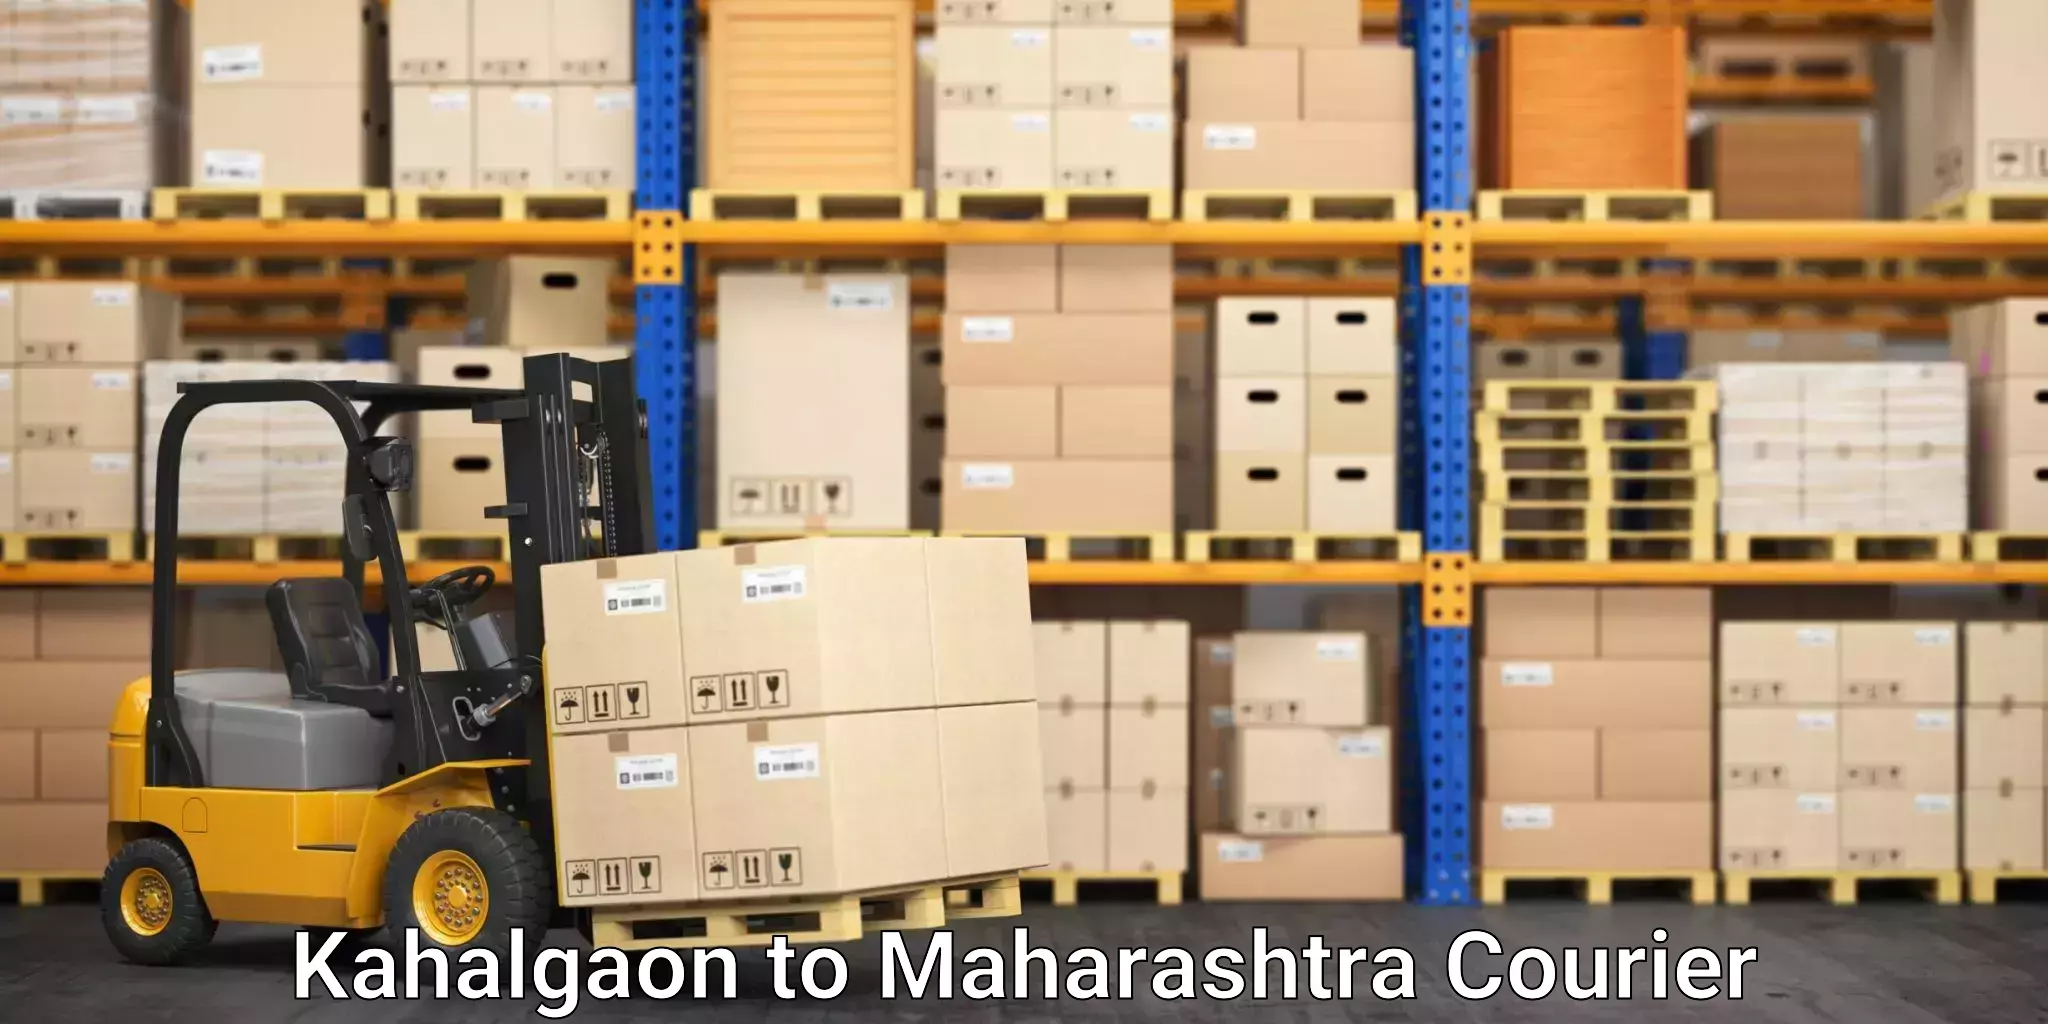 Furniture moving strategies Kahalgaon to Navi Mumbai